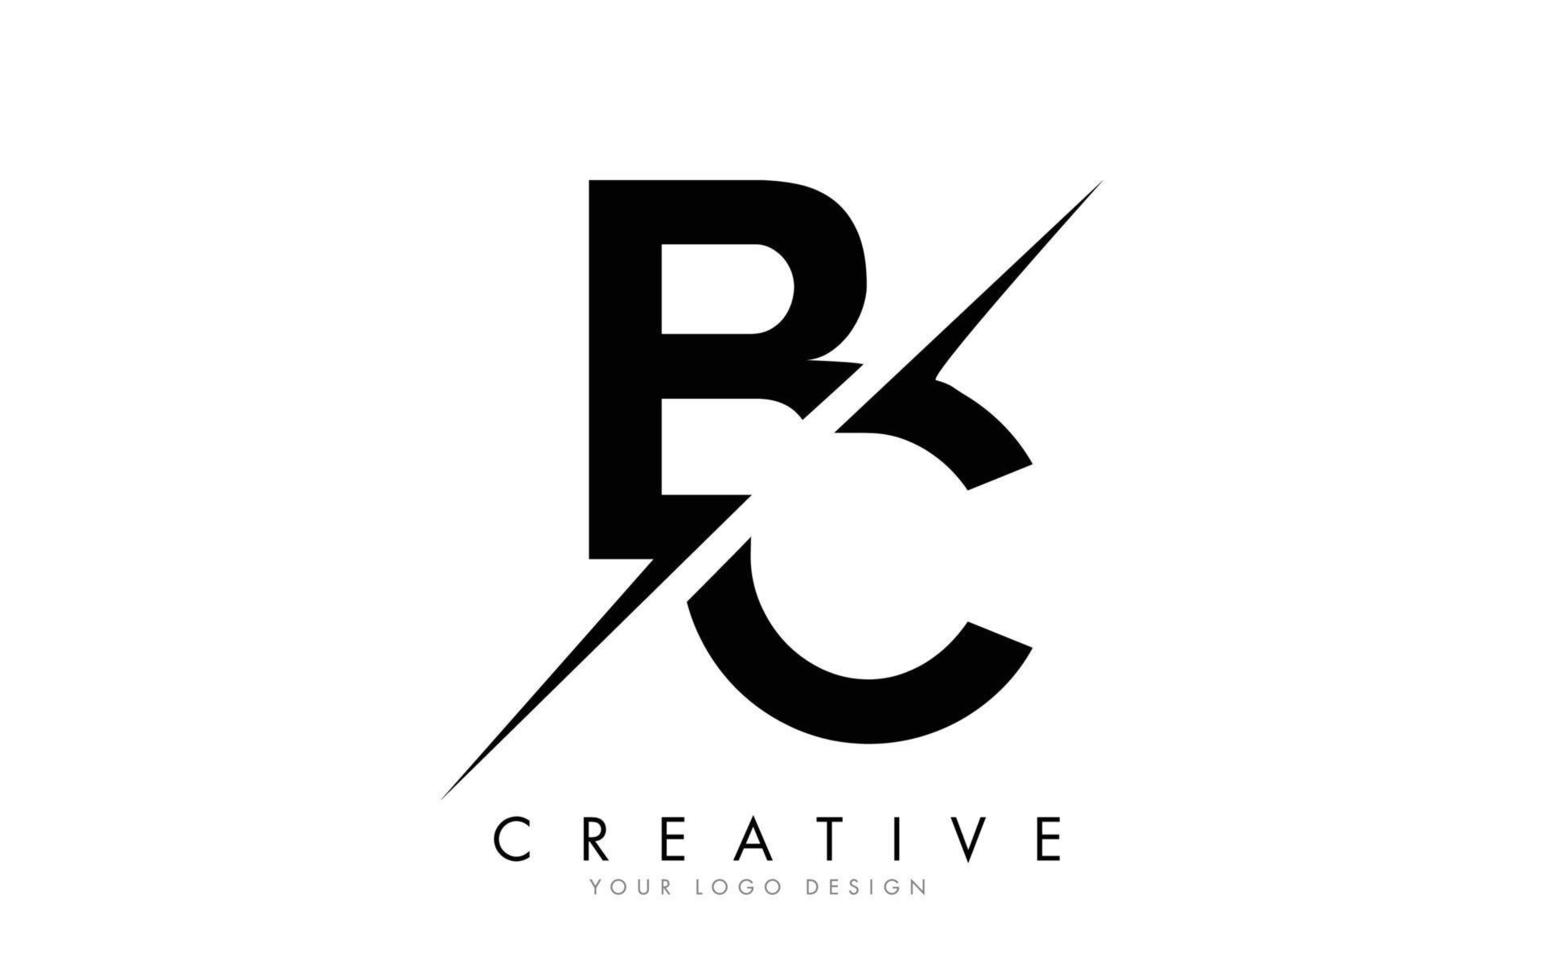 BC B C Letter Logo Design with a Creative Cut. vector